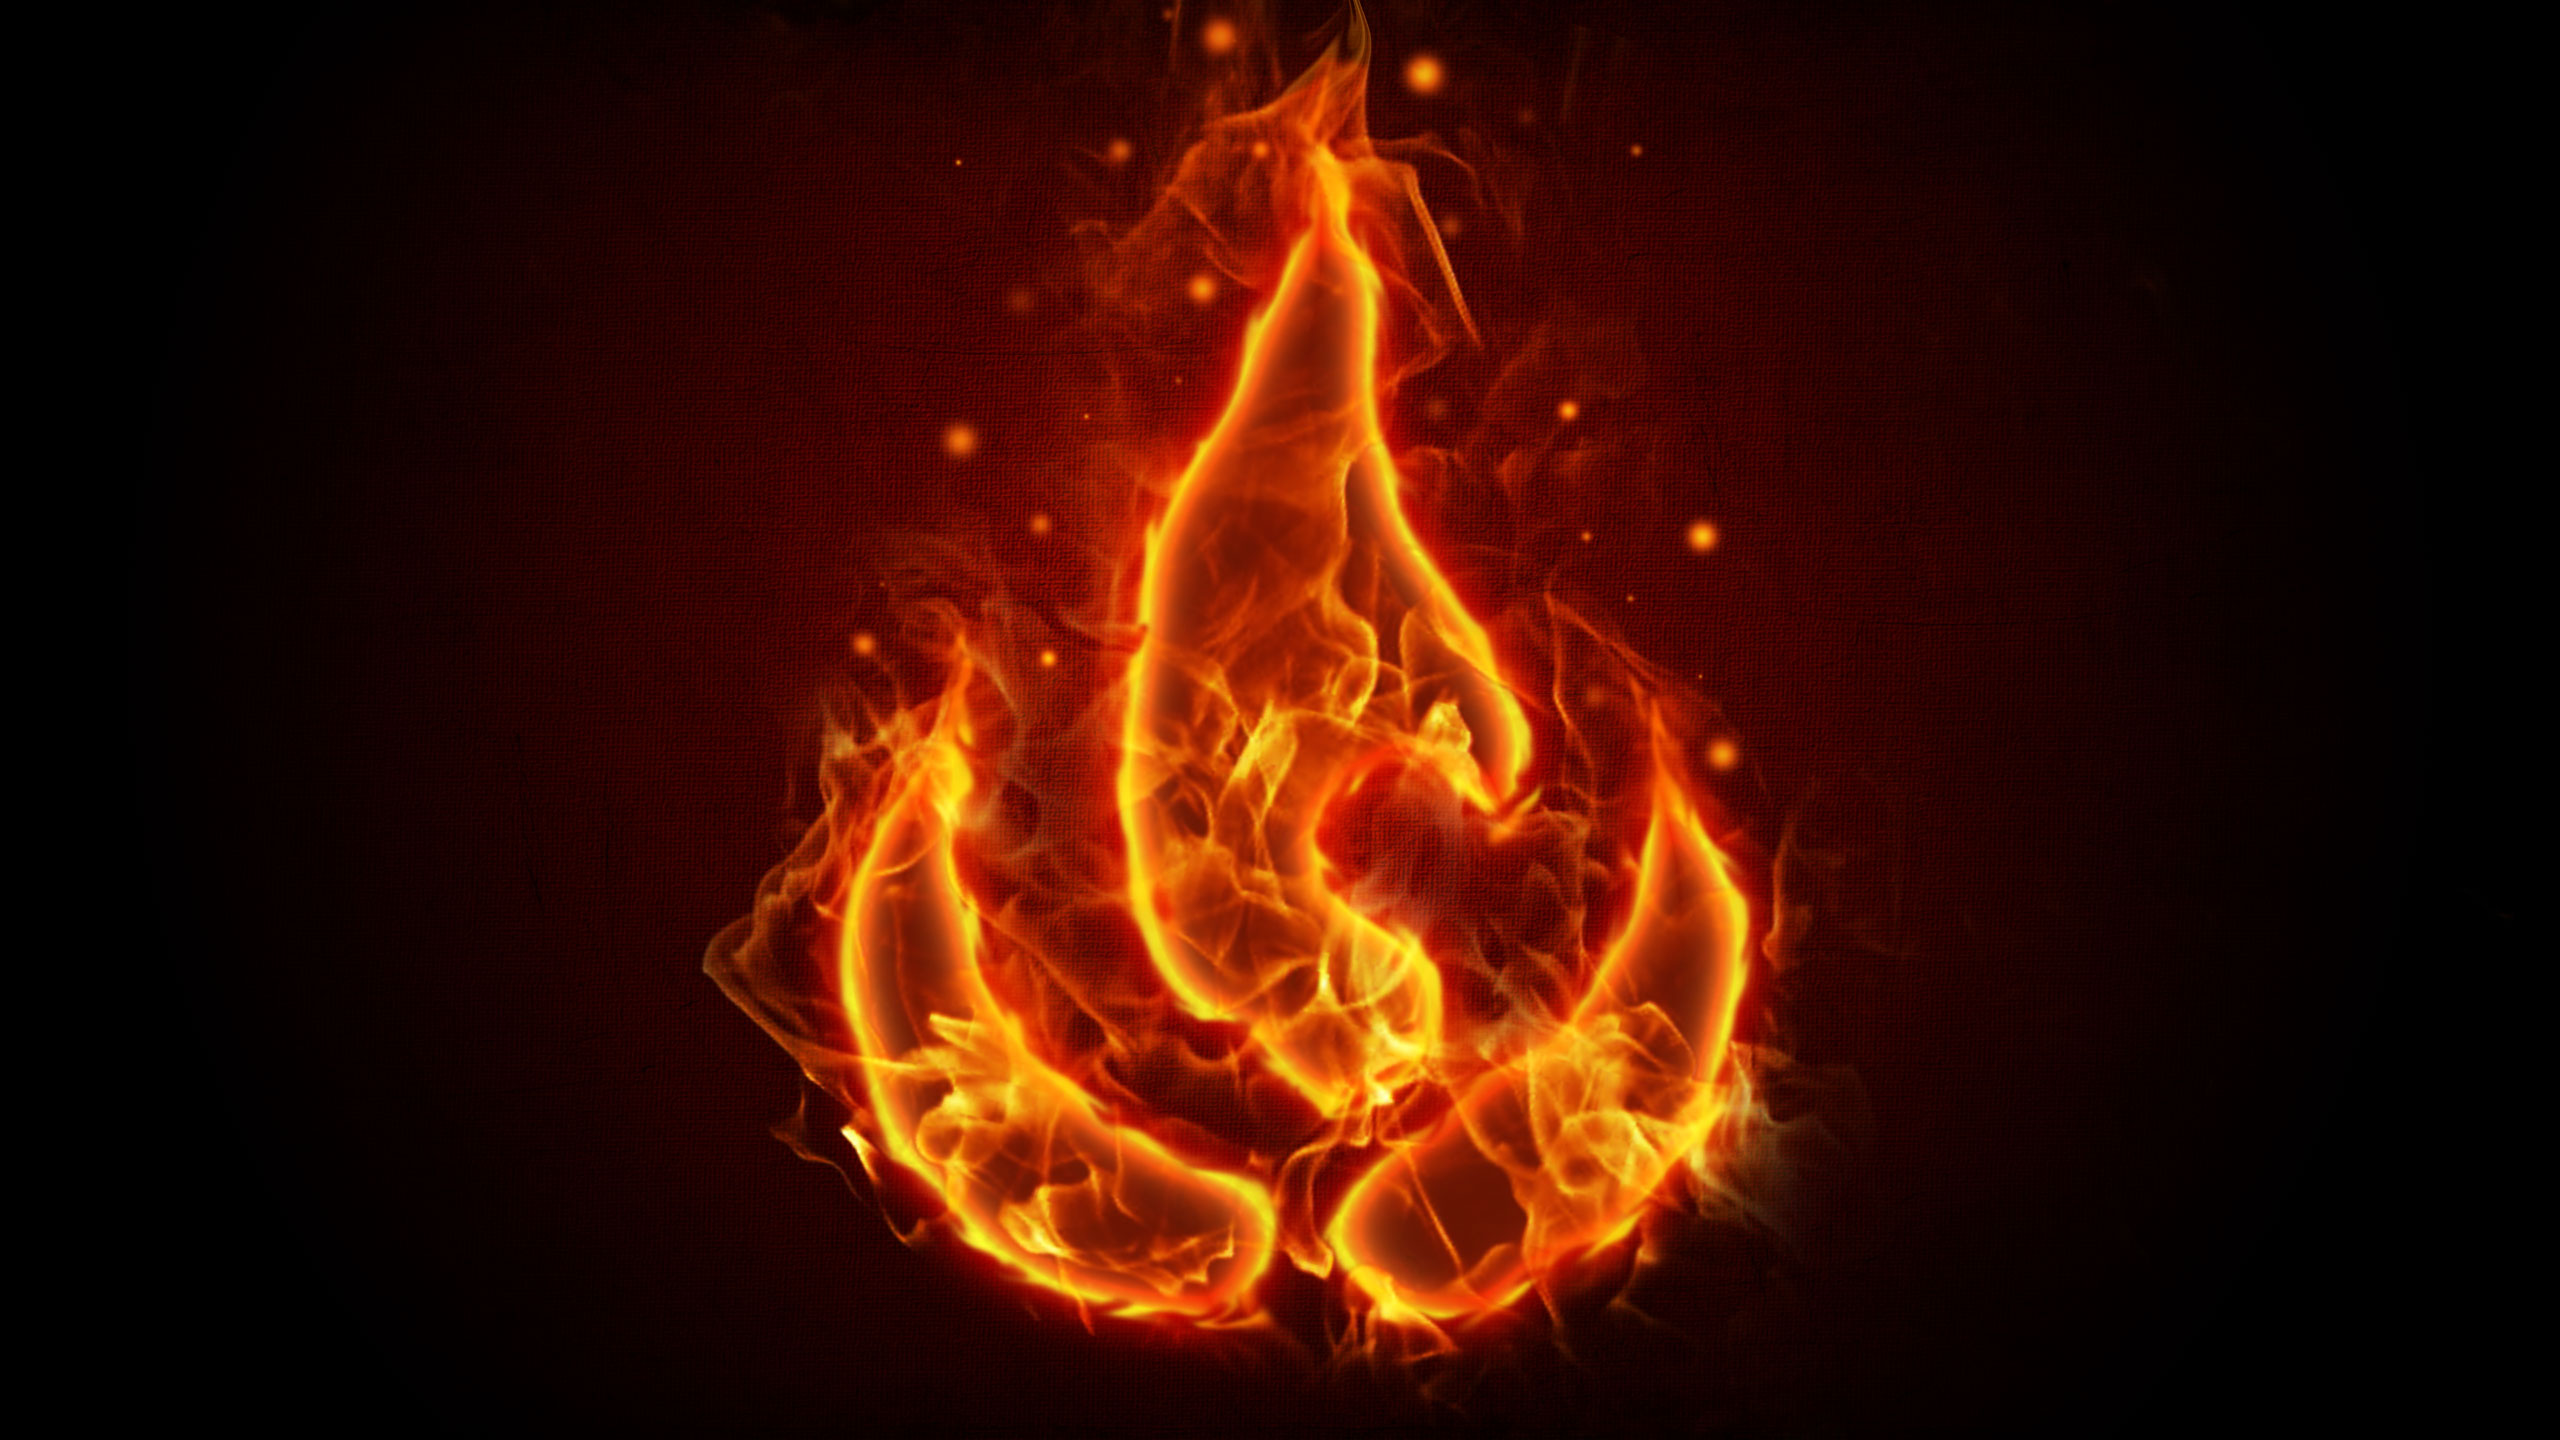 Fire Flame Wallpaper 2560x1440 Fire Flame